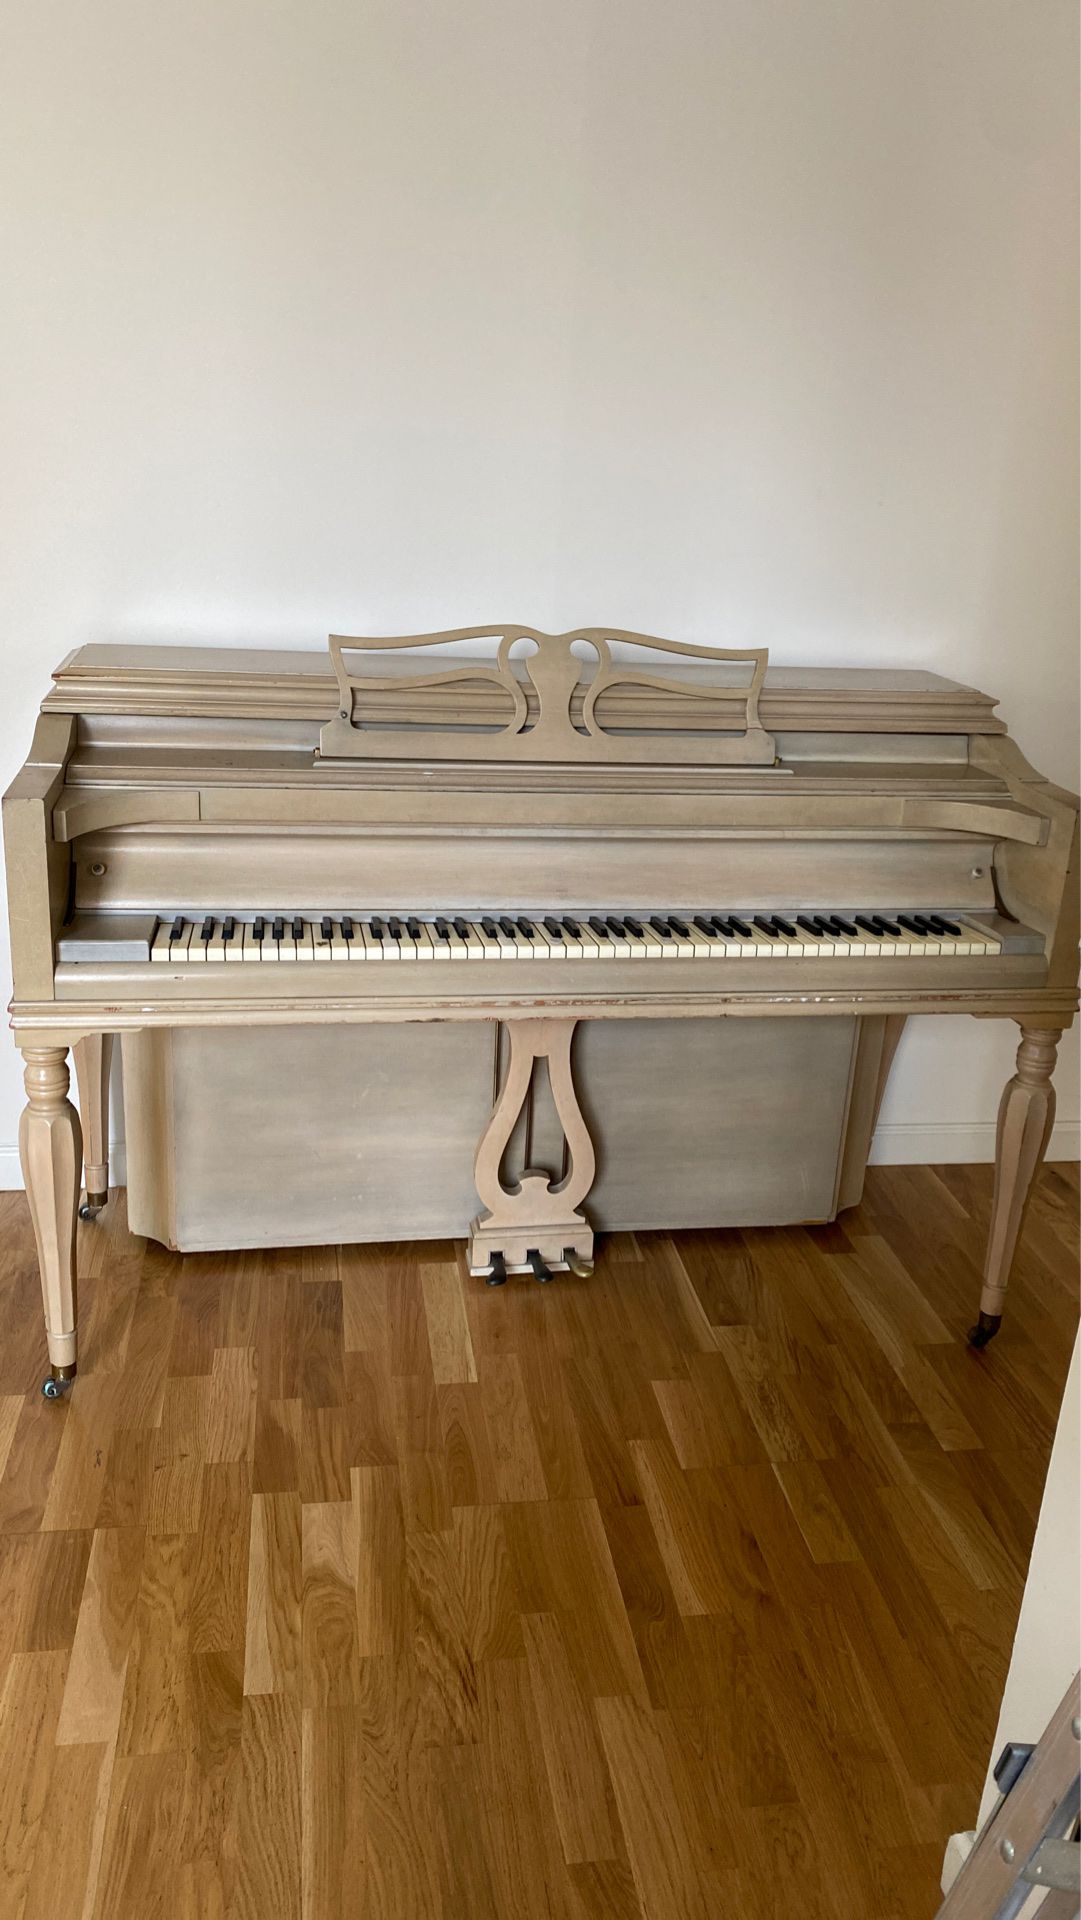 Knabe Antique Upright Piano